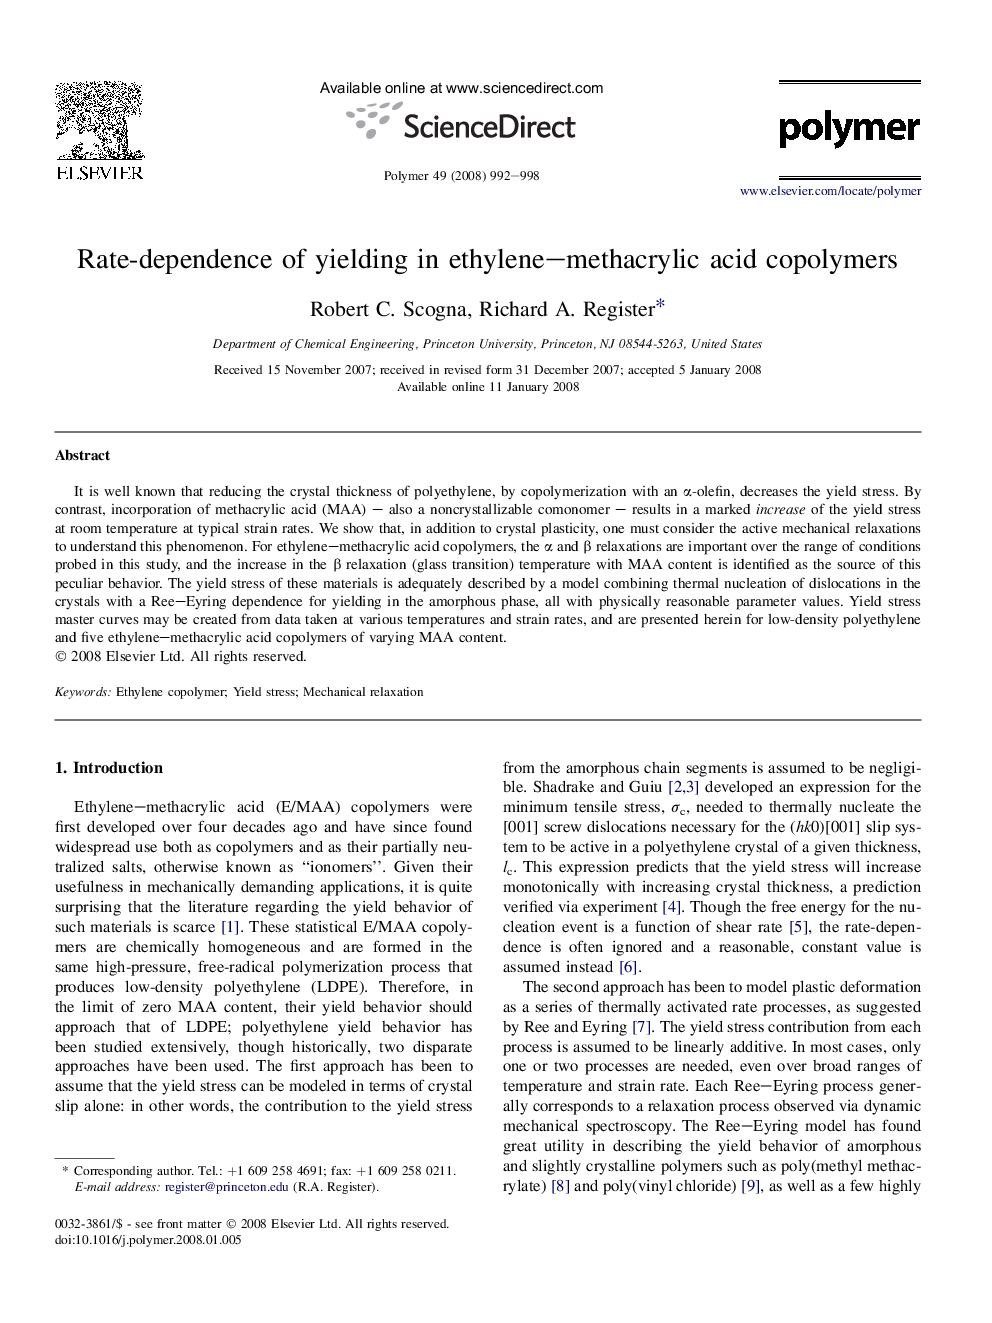 Rate-dependence of yielding in ethylene-methacrylic acid copolymers